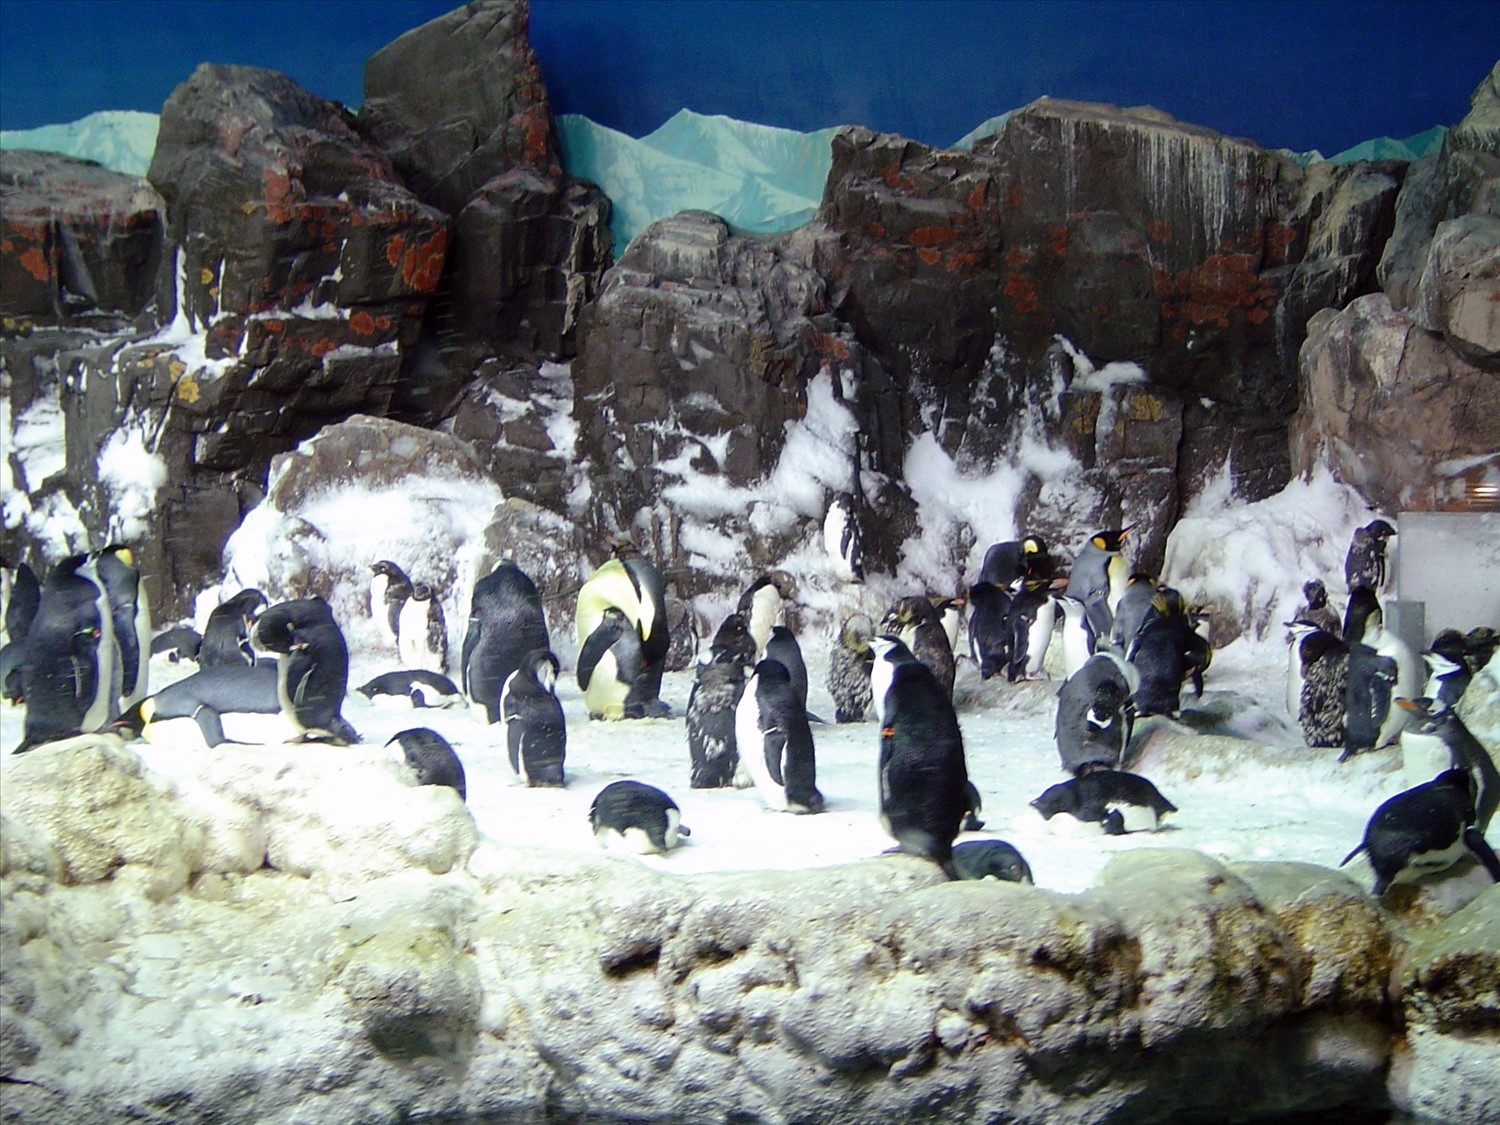 A mess of penguins. DSC00511.jpg. Uploaded by Erik Hoffmann on 2/24/2004. 